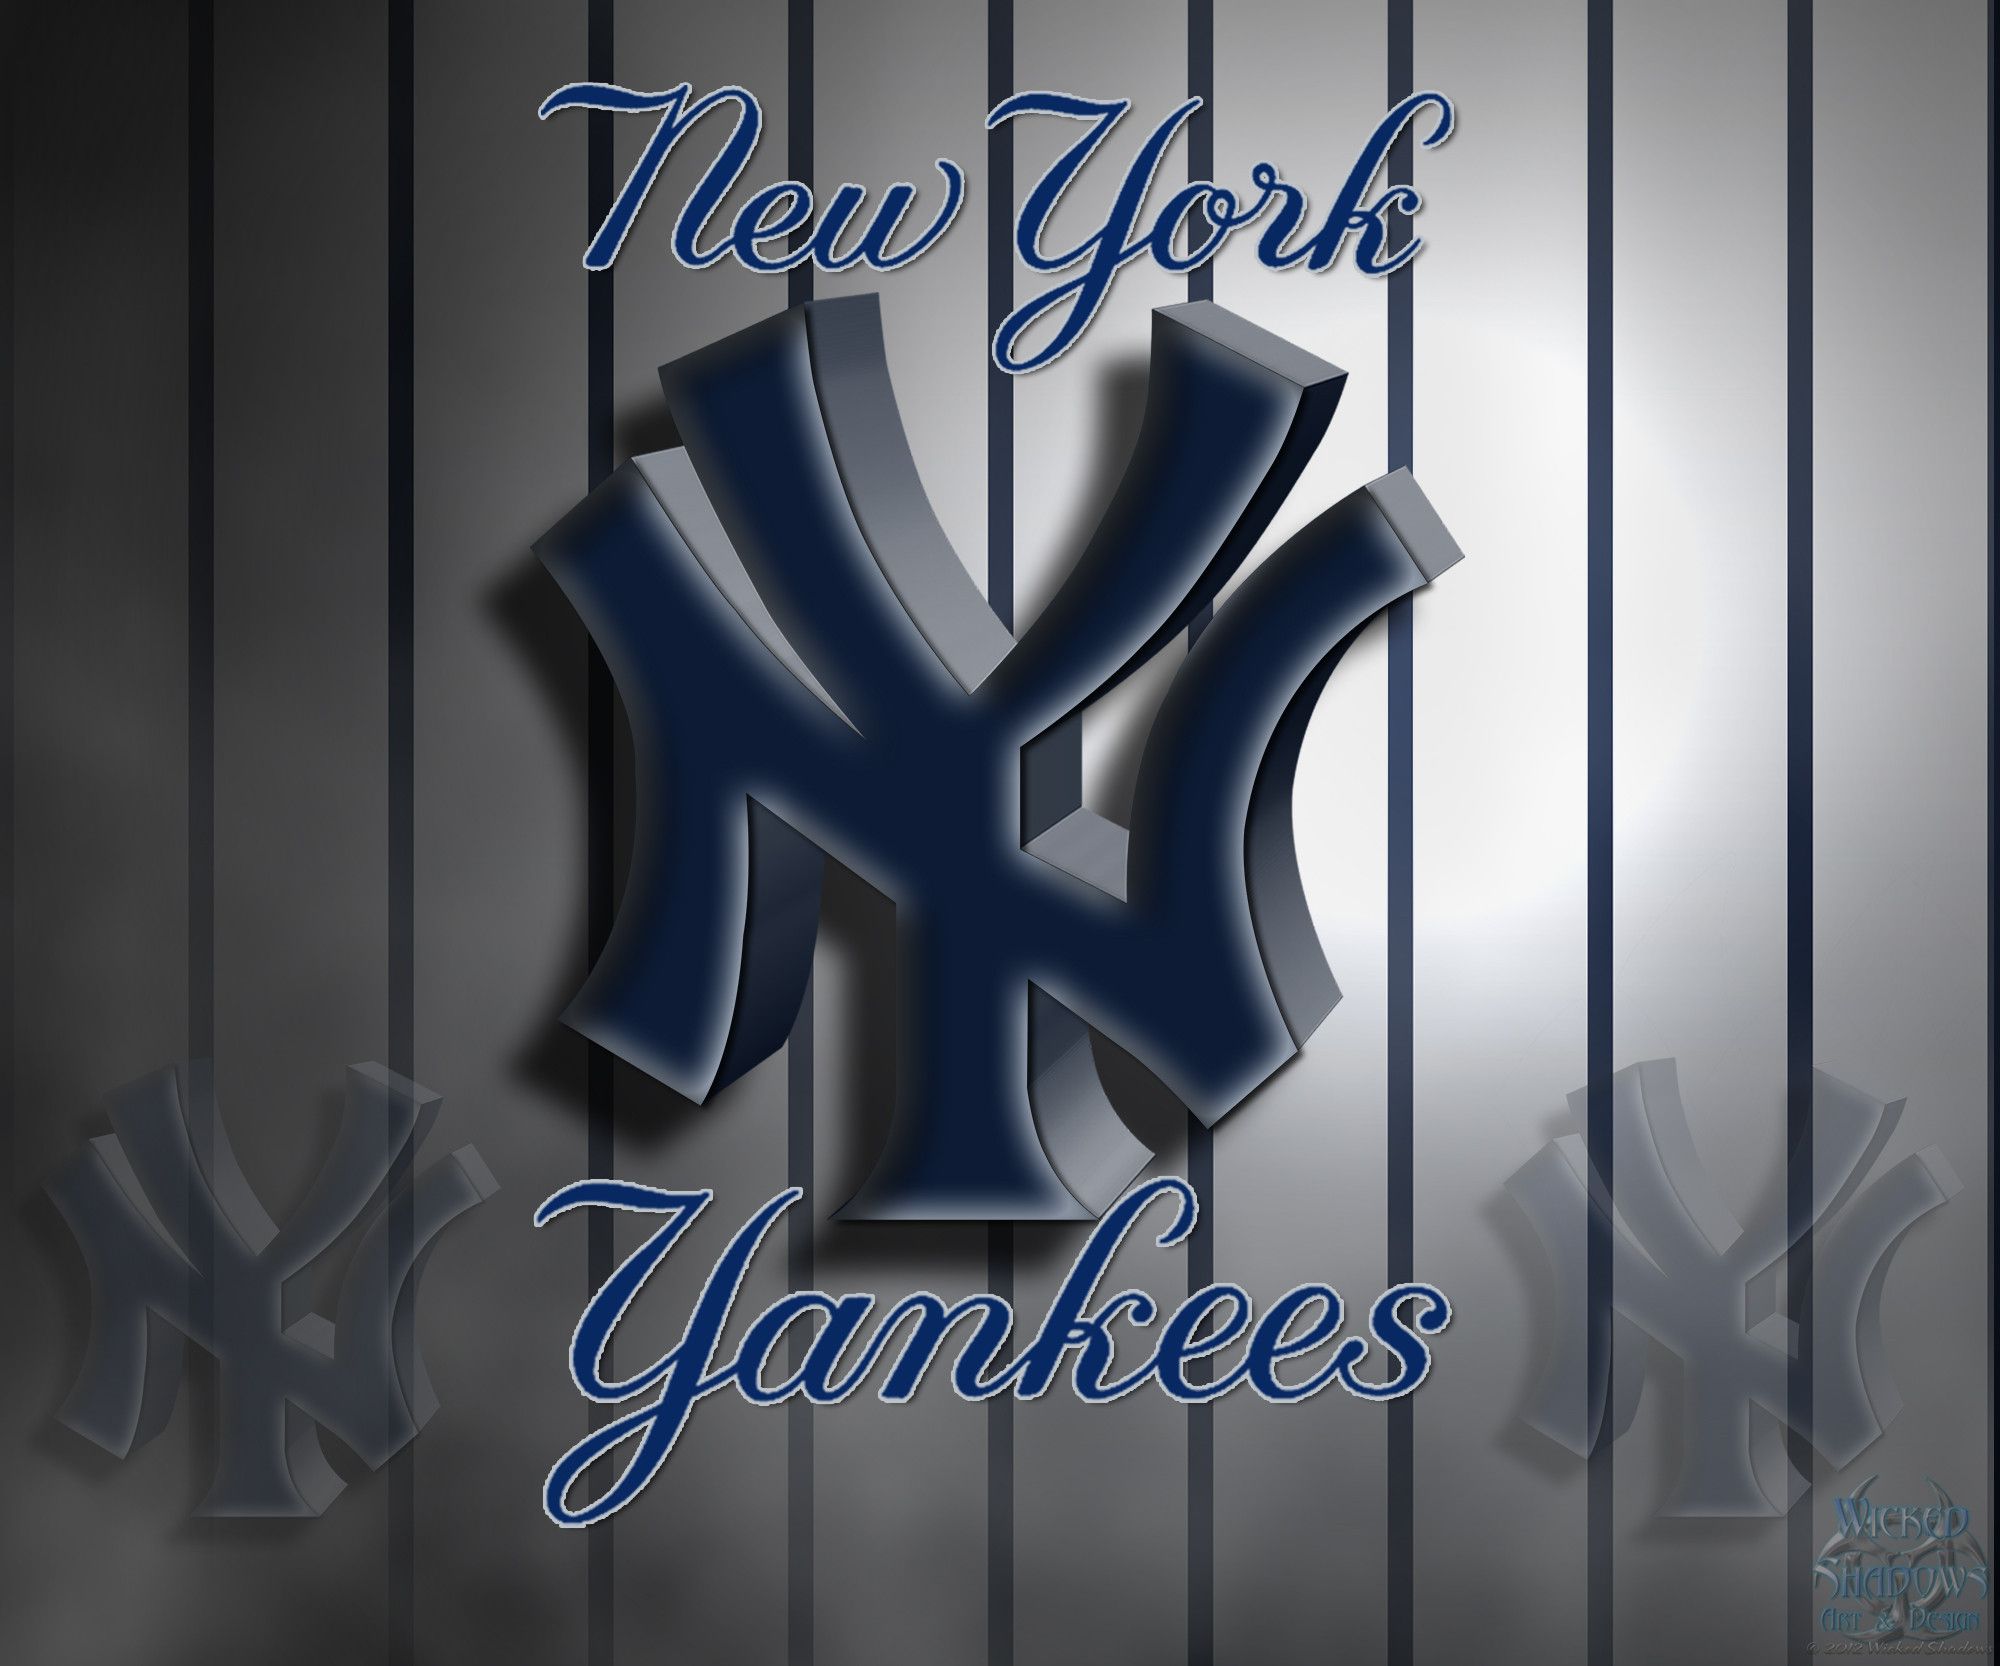 1927 Yankees - Baseball & Sports Background Wallpapers on Desktop